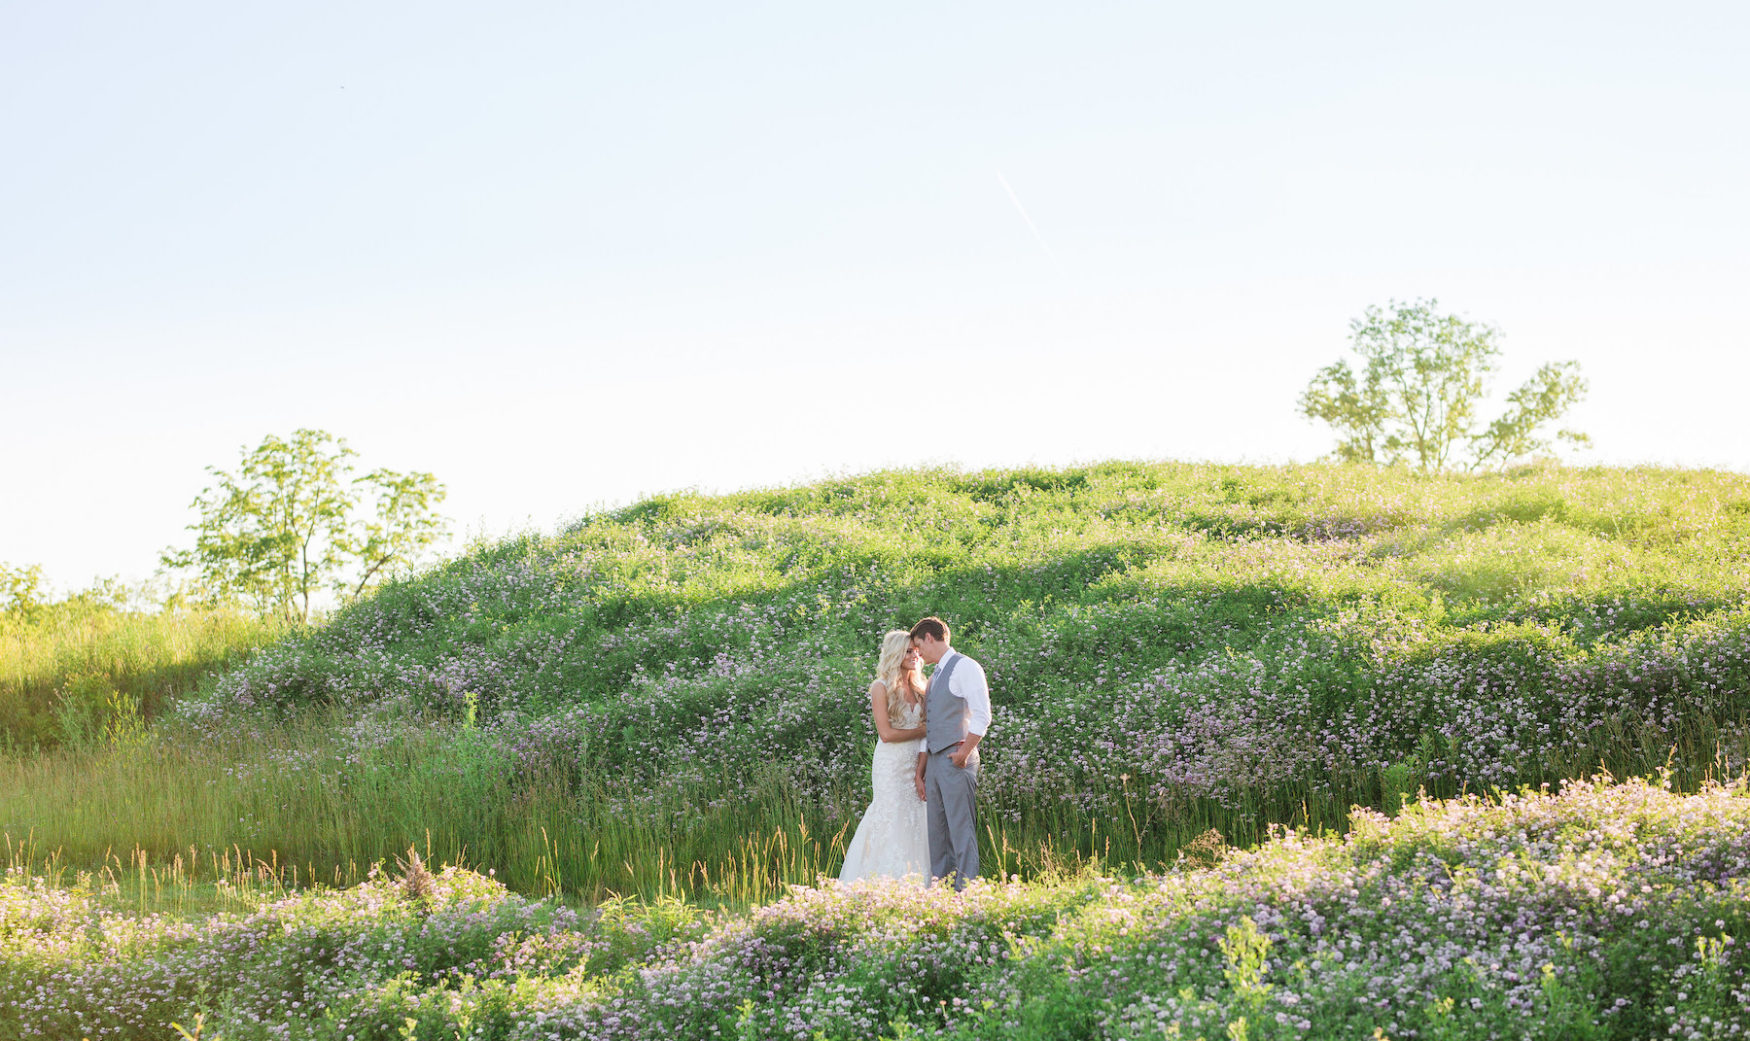 classy bride and groom posing in hills of wildflowers